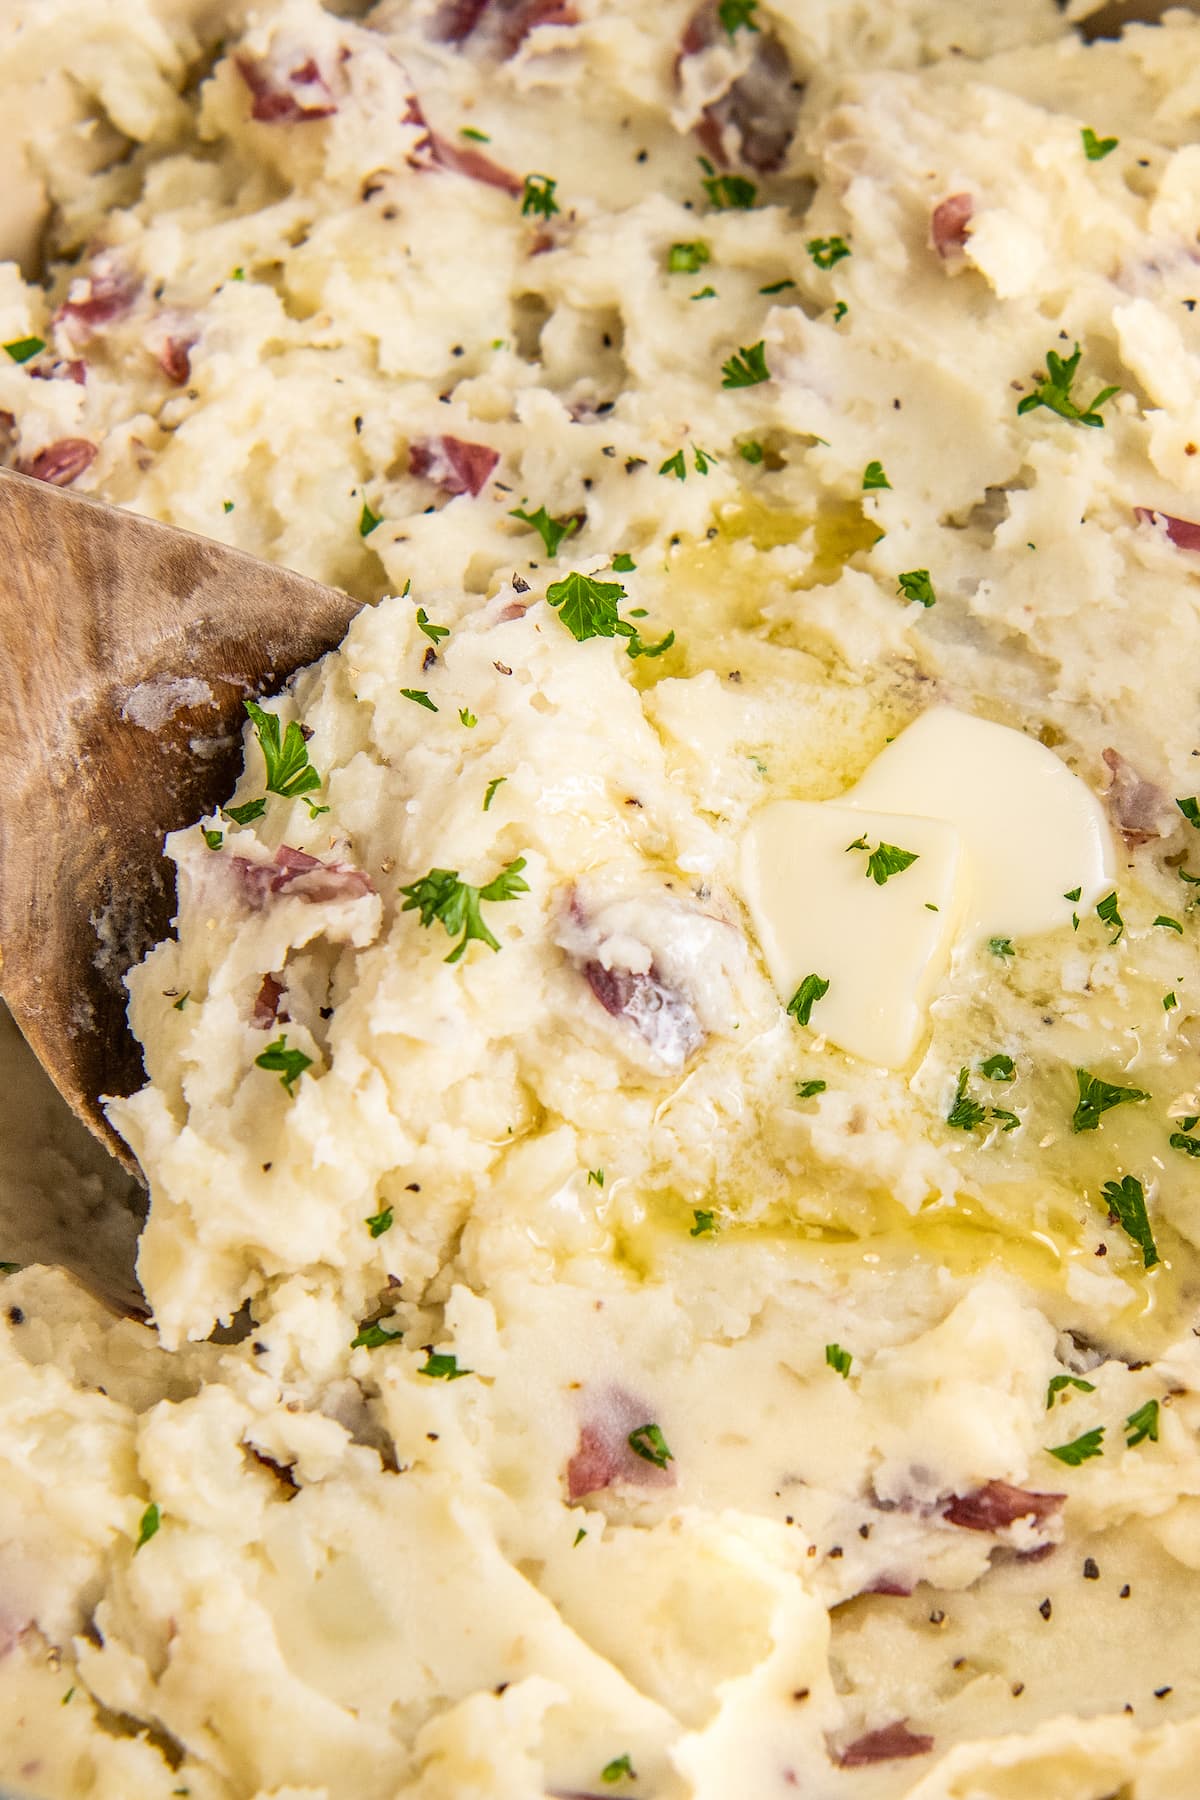 A close-up shot of a bowl of mashed potatoes.